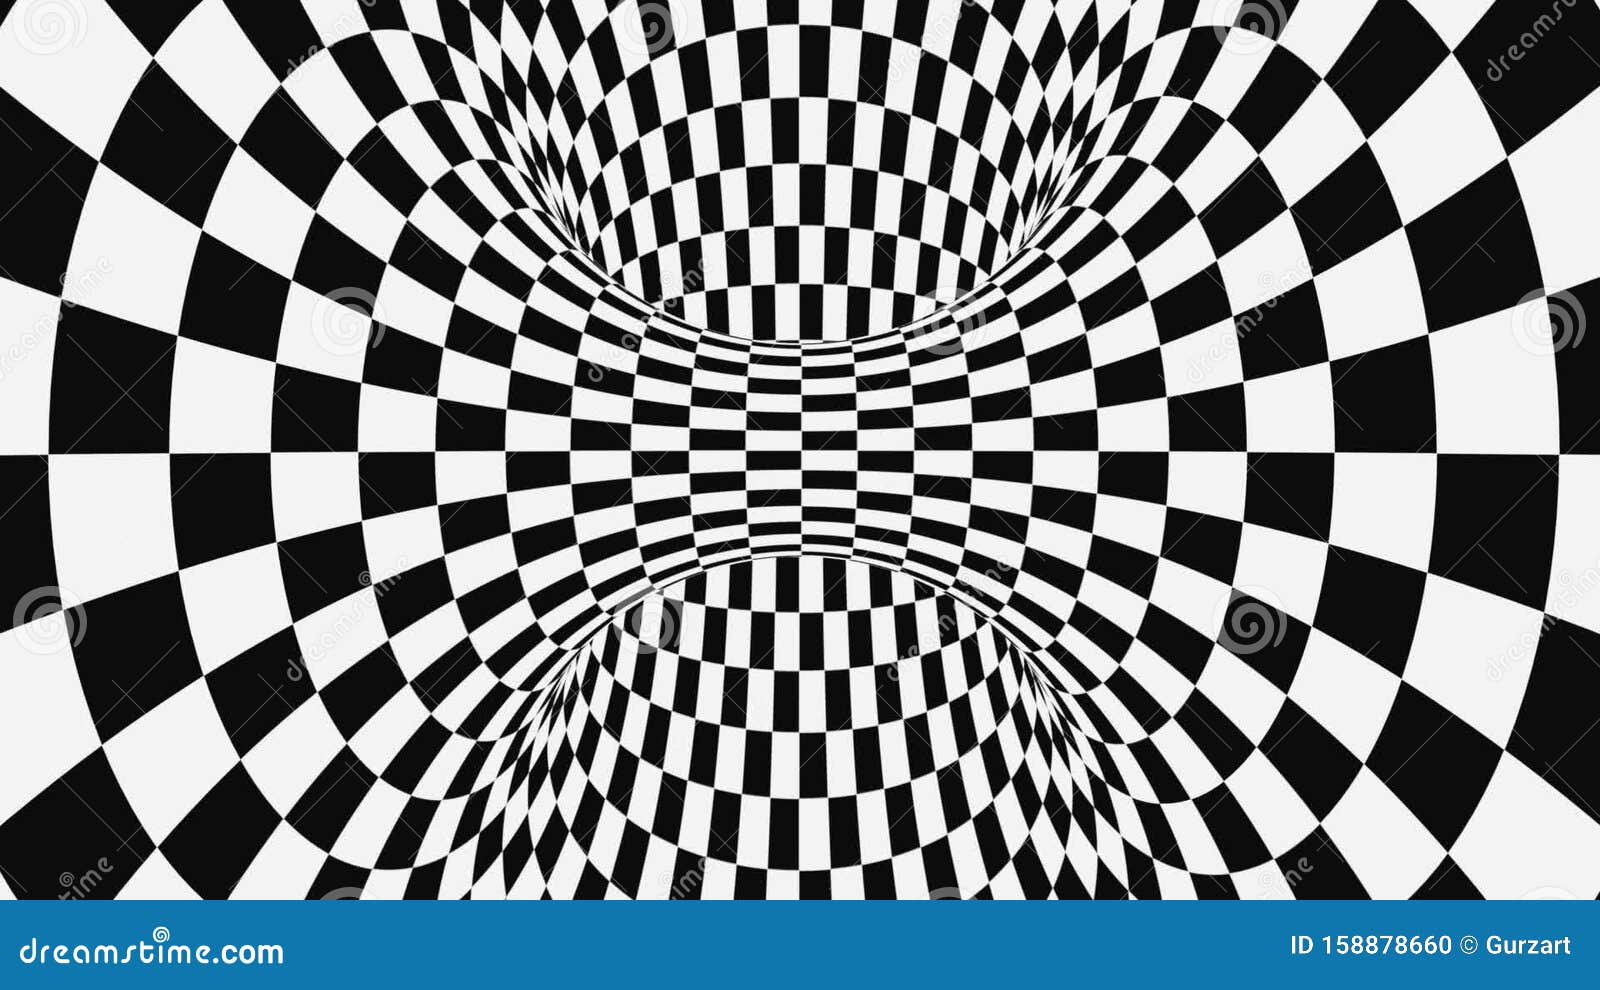 moving picture illusion wallpaper